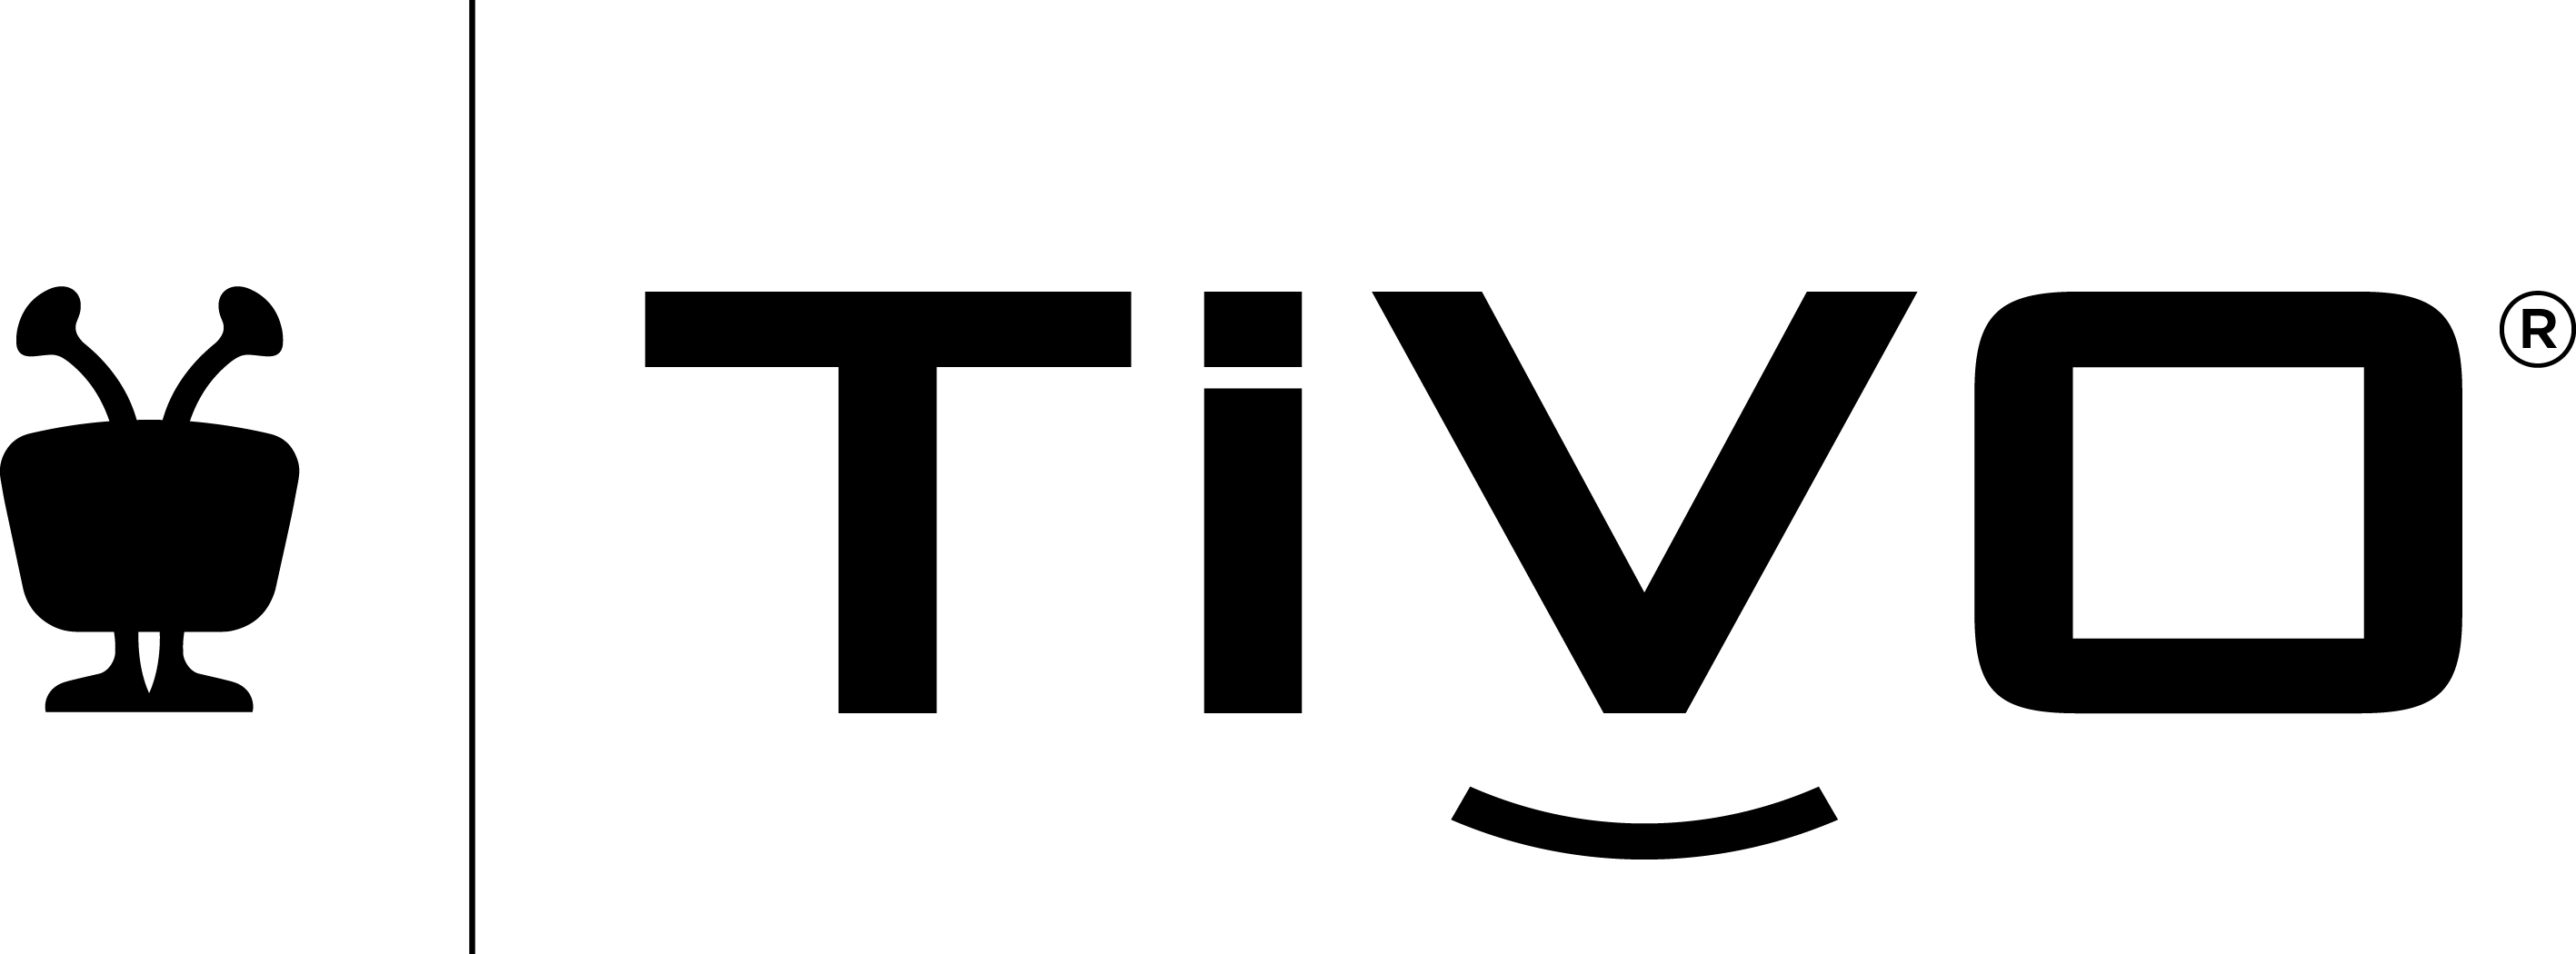 TiVo Logo 